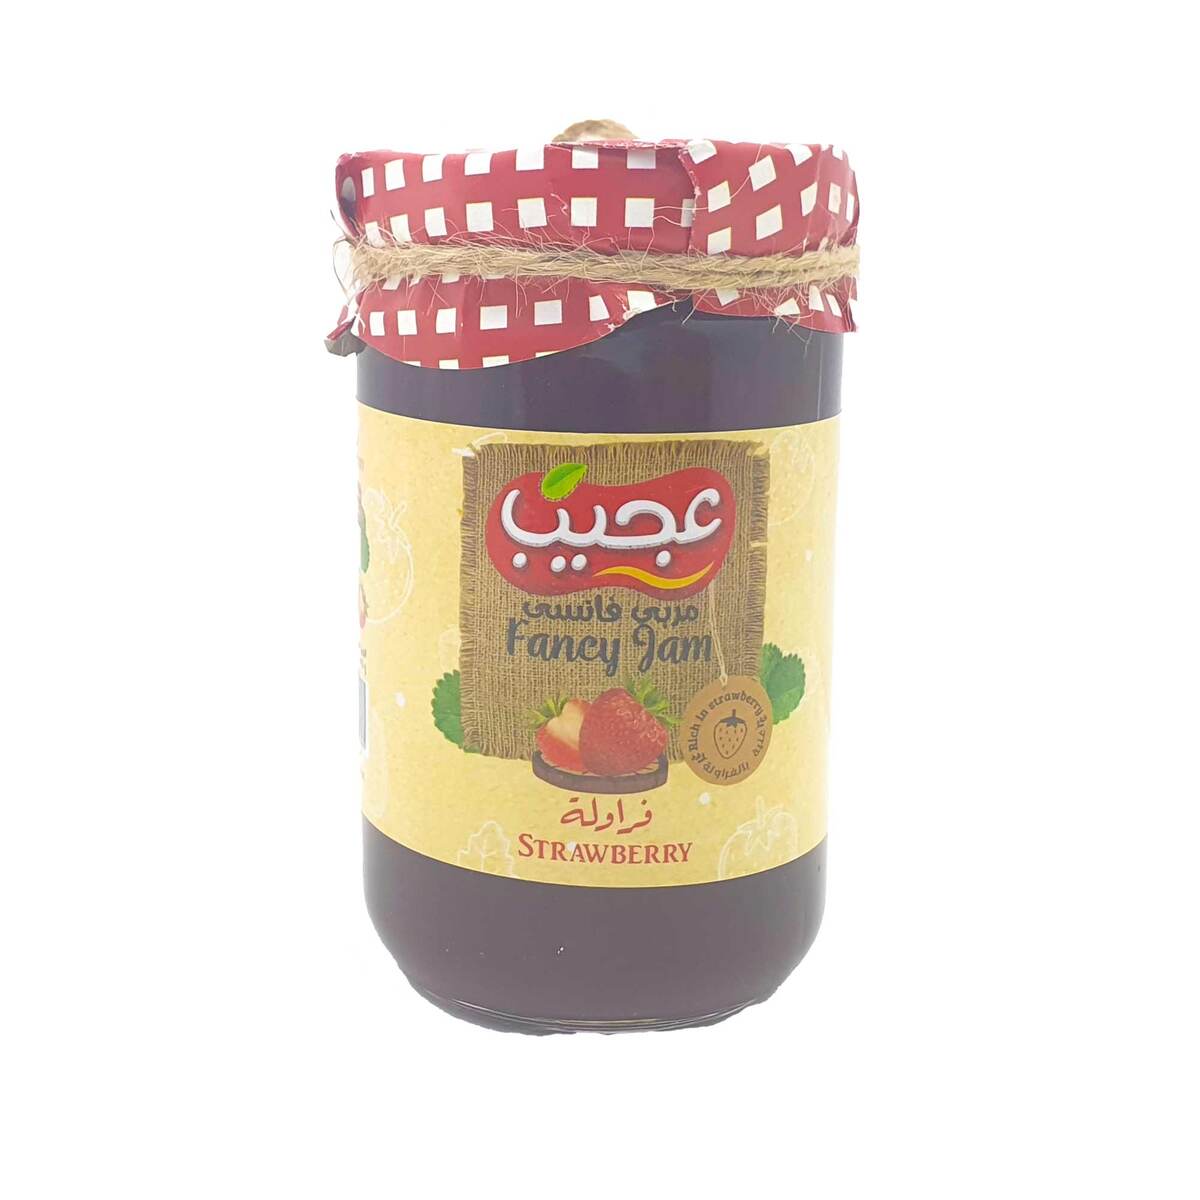 Ajeeb Fancy Jam Strawberry Value Pack 2 x 340g